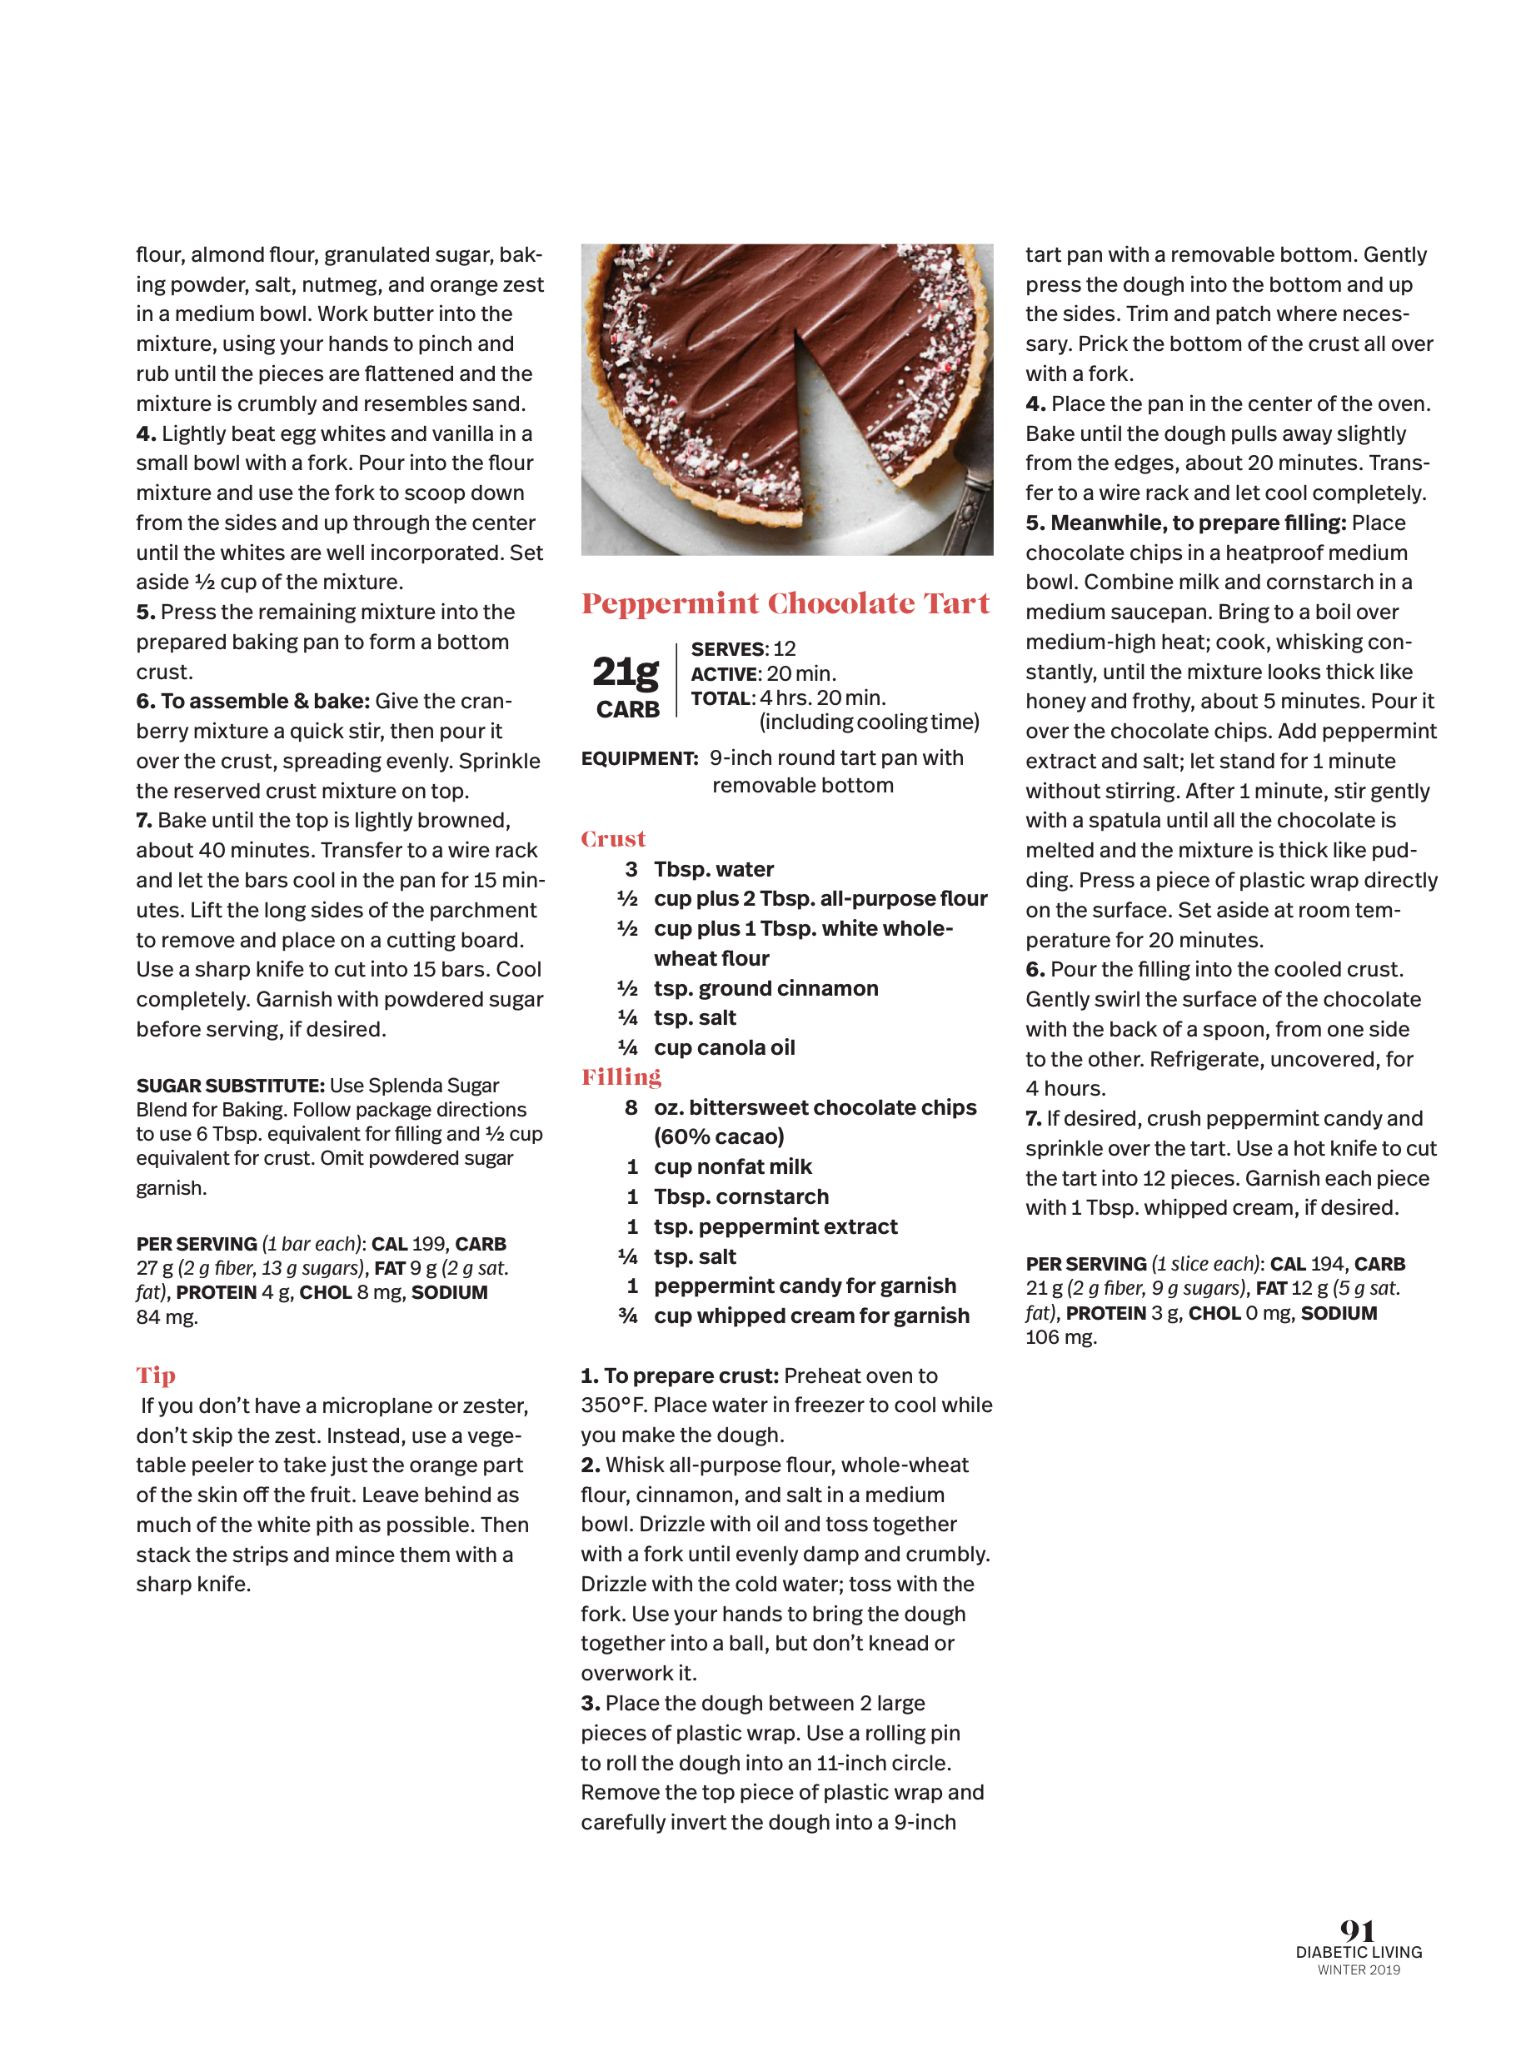 Diabetic Living Magazine Recipes
 "Recipes" from Diabetic Living Magazine Winter 2018 Read